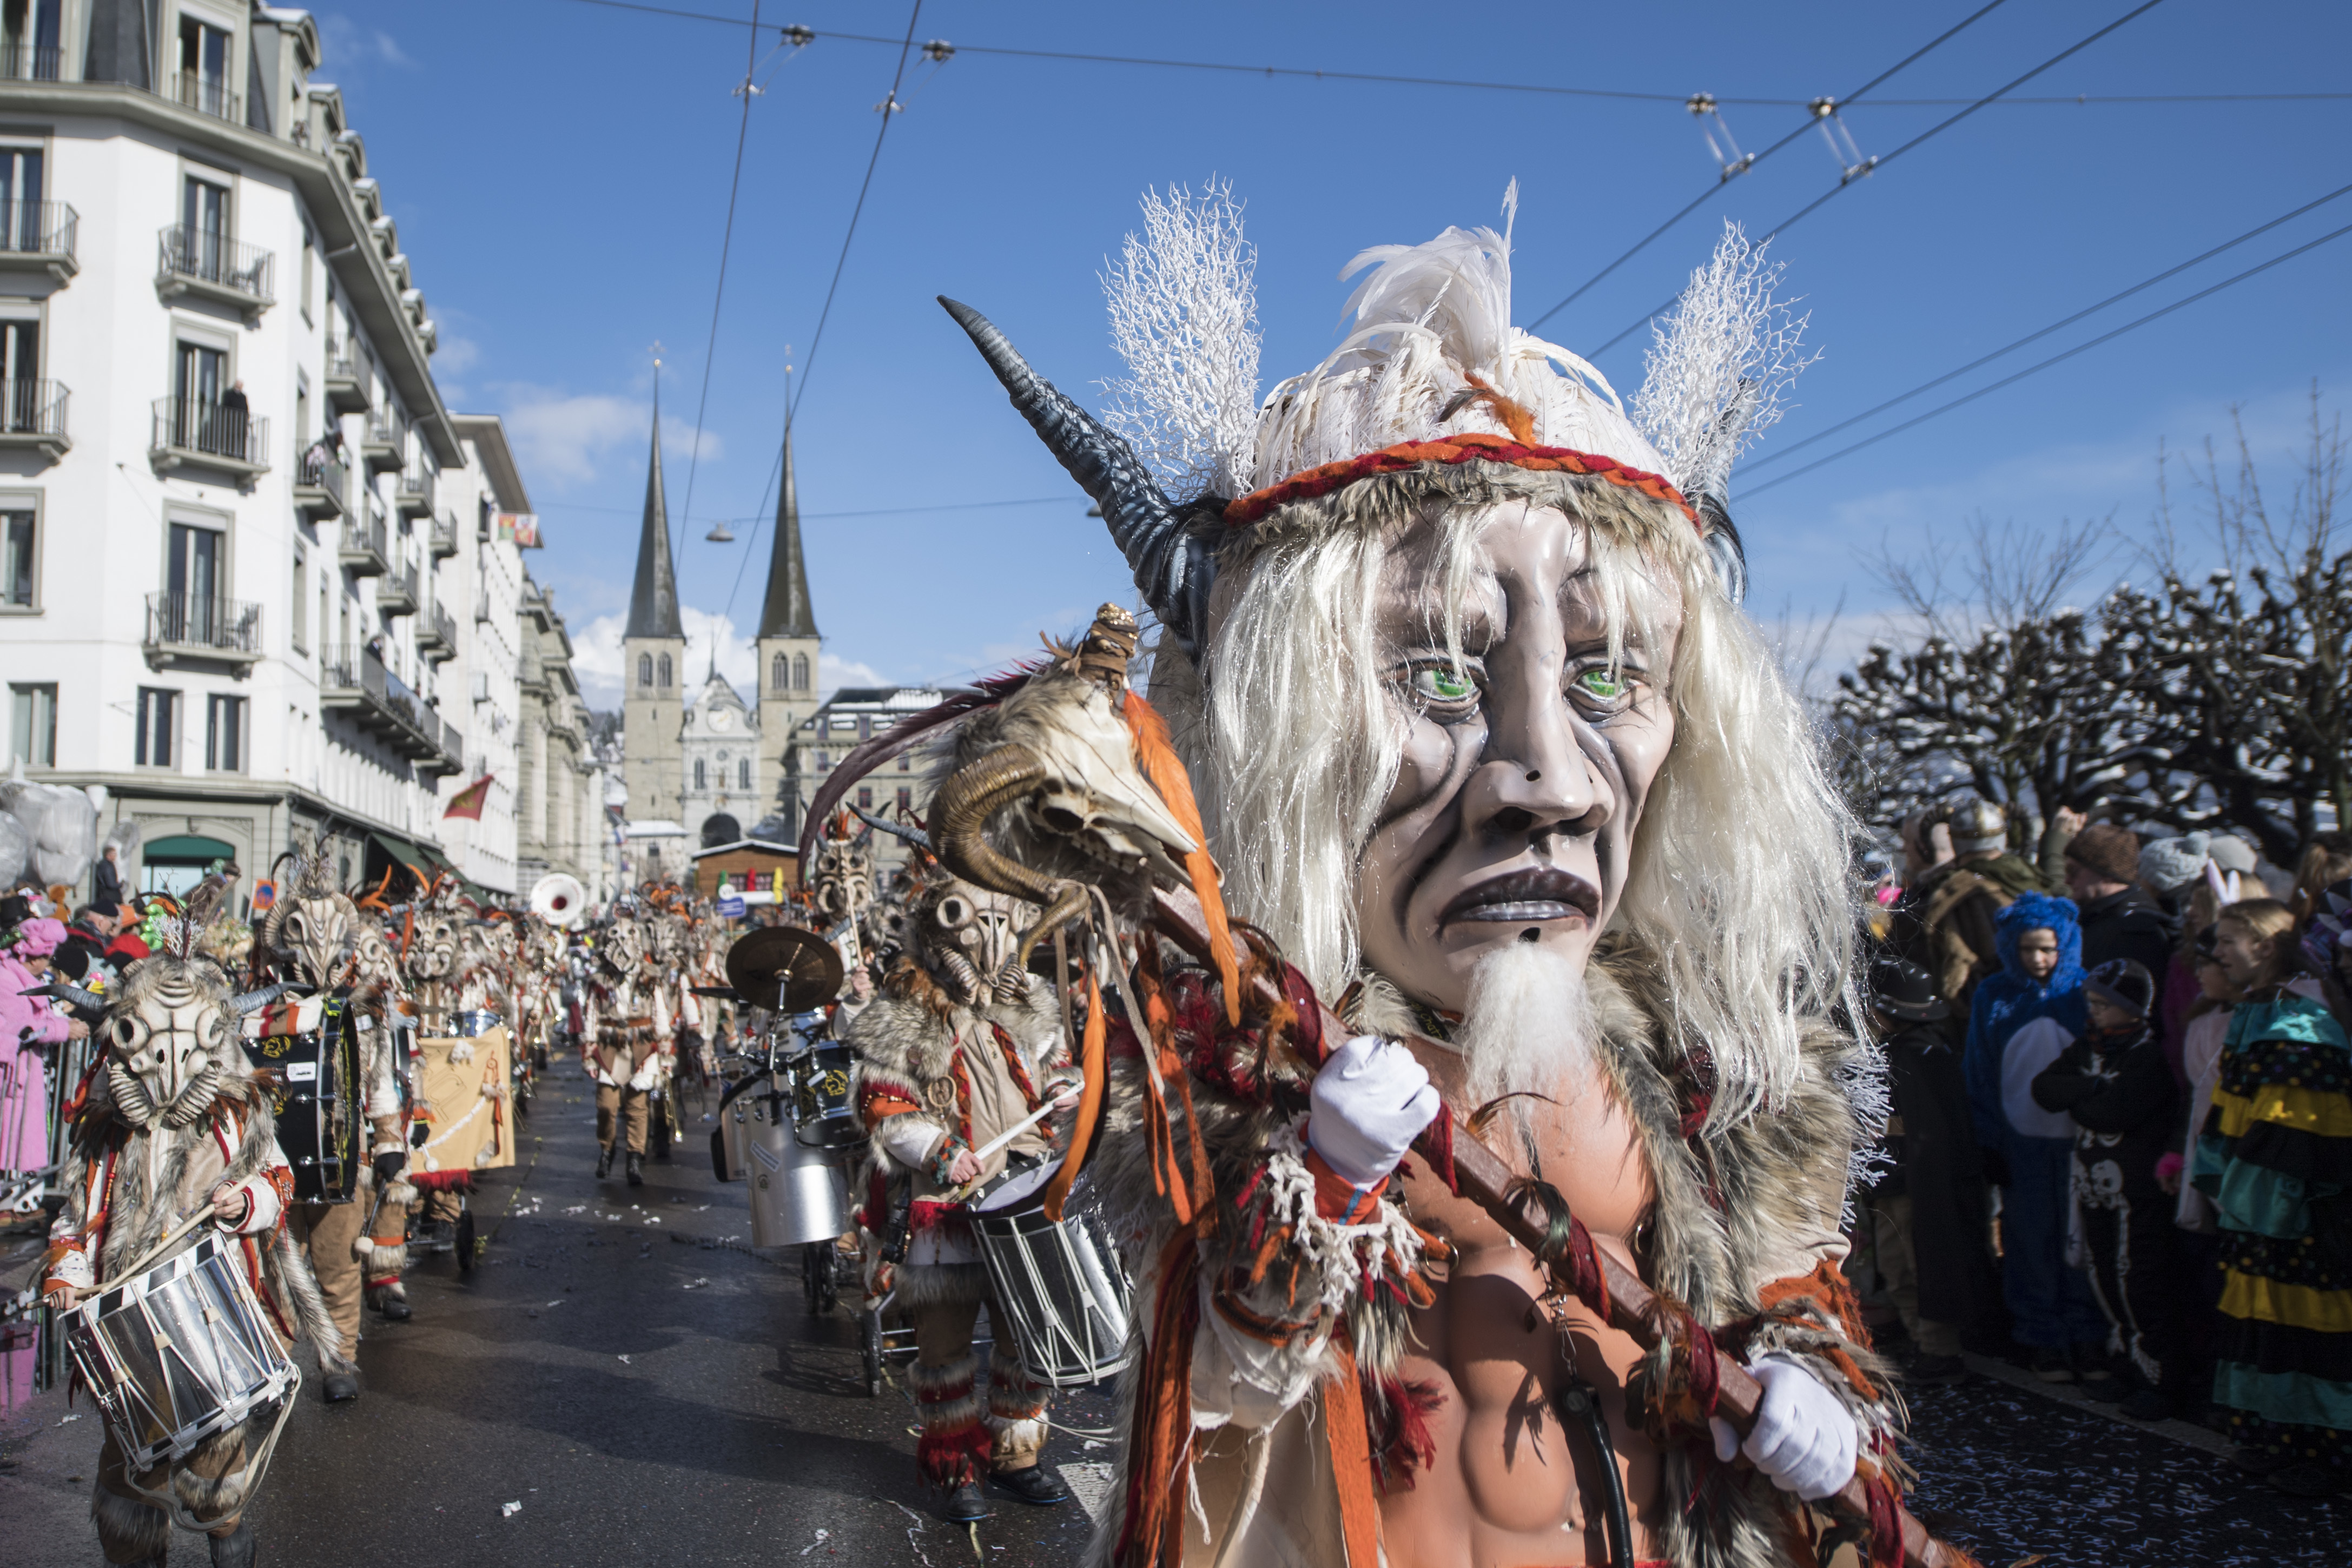 Masked revelers parade through the streets during the the carnival season in Lucerne, Switzerland, Monday, Feb. 12, 2018. (Urs Flueeler/Keystone via AP)